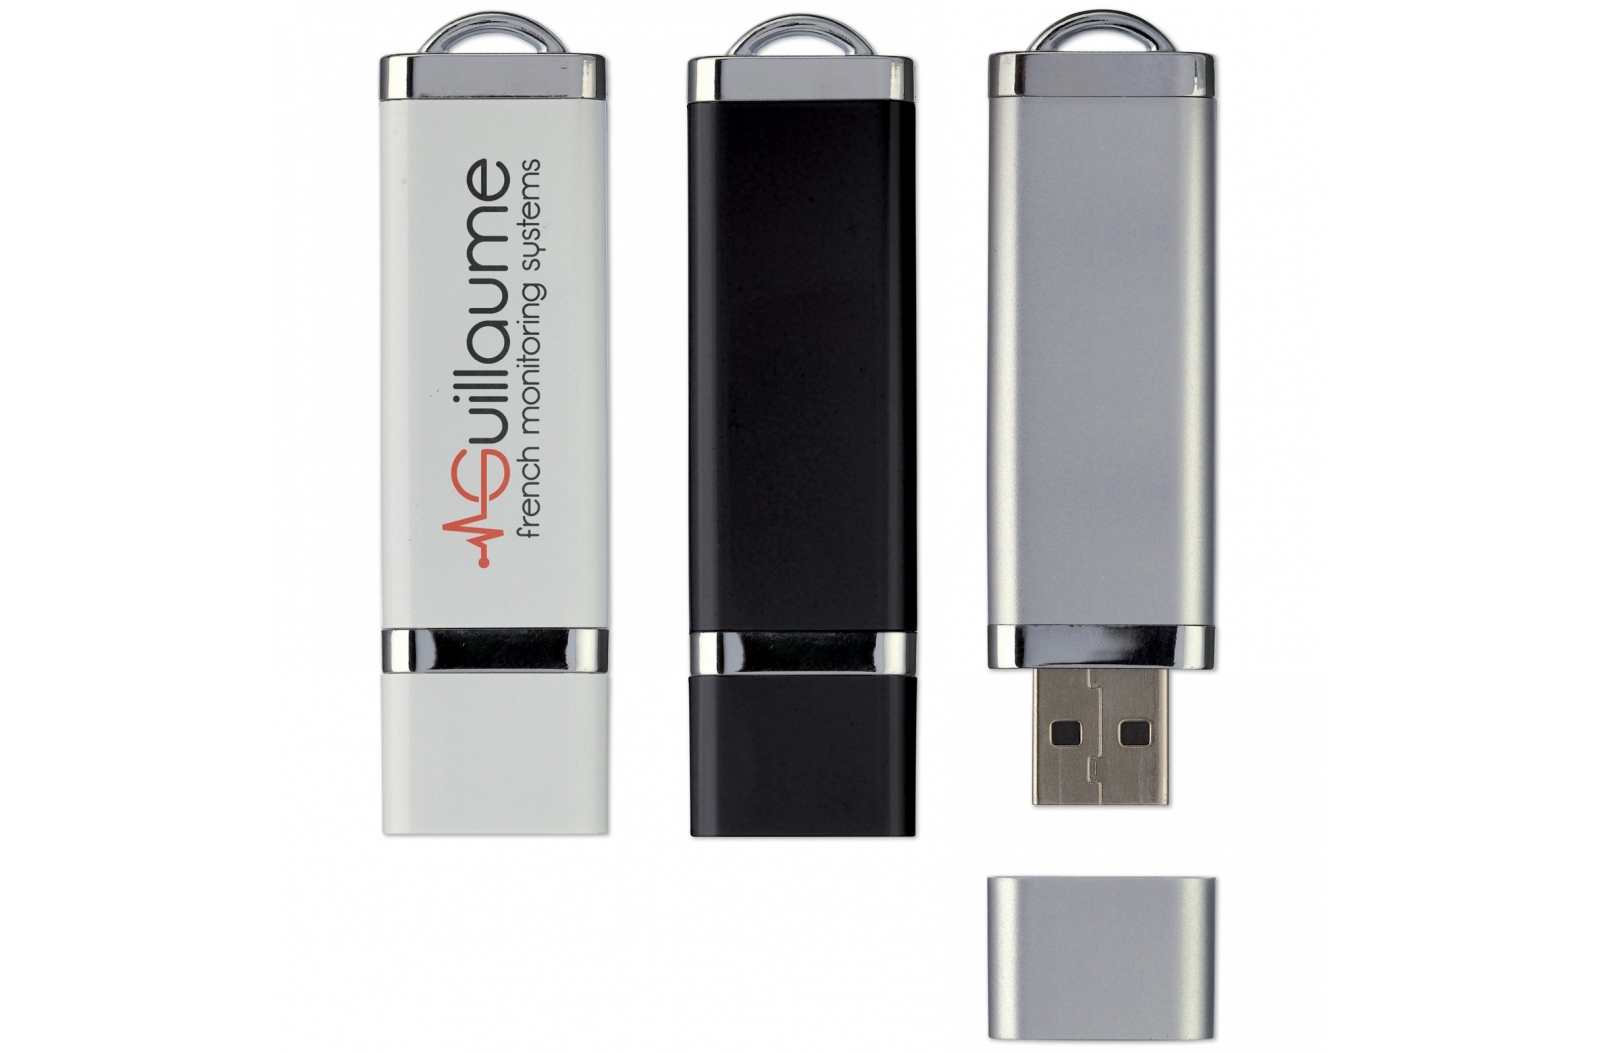 Clé USB Slim 8GB - Zaprinta France